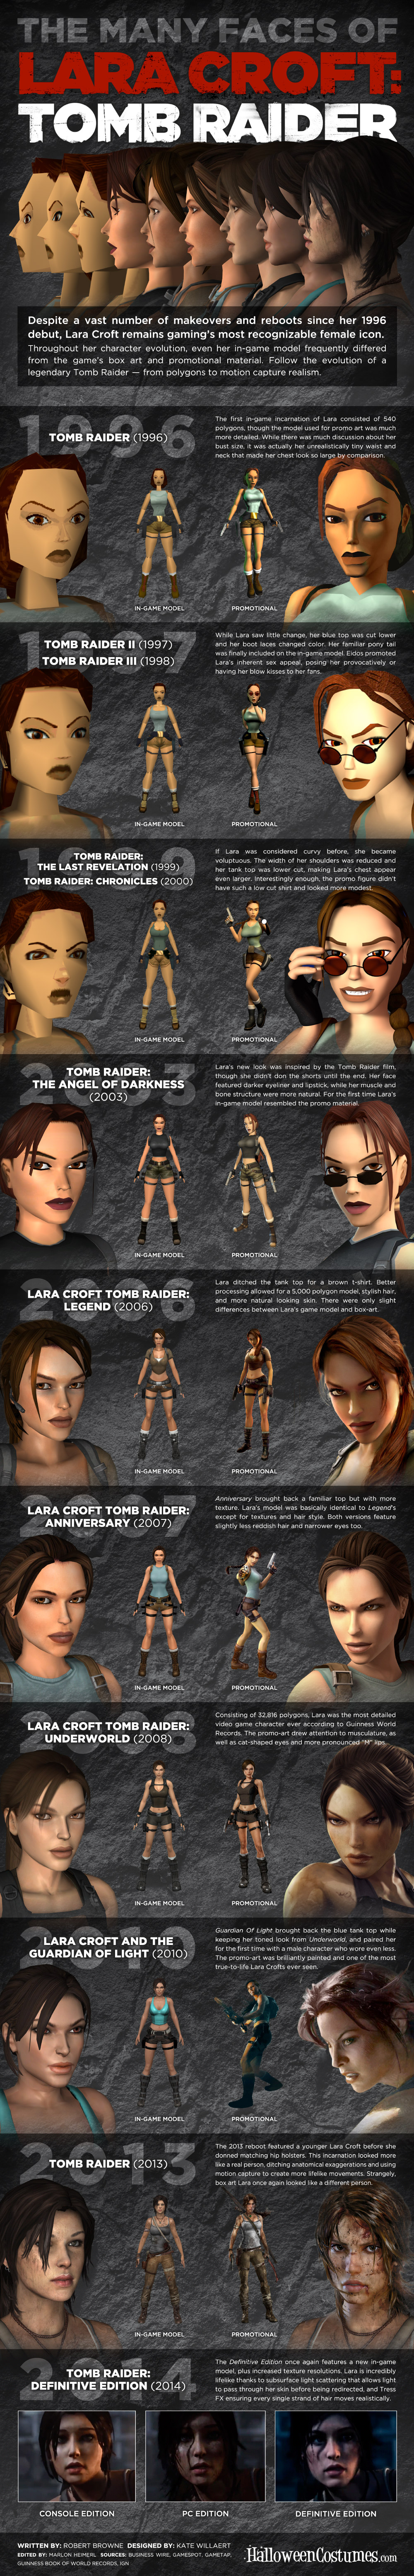 Lara Croft Infographic